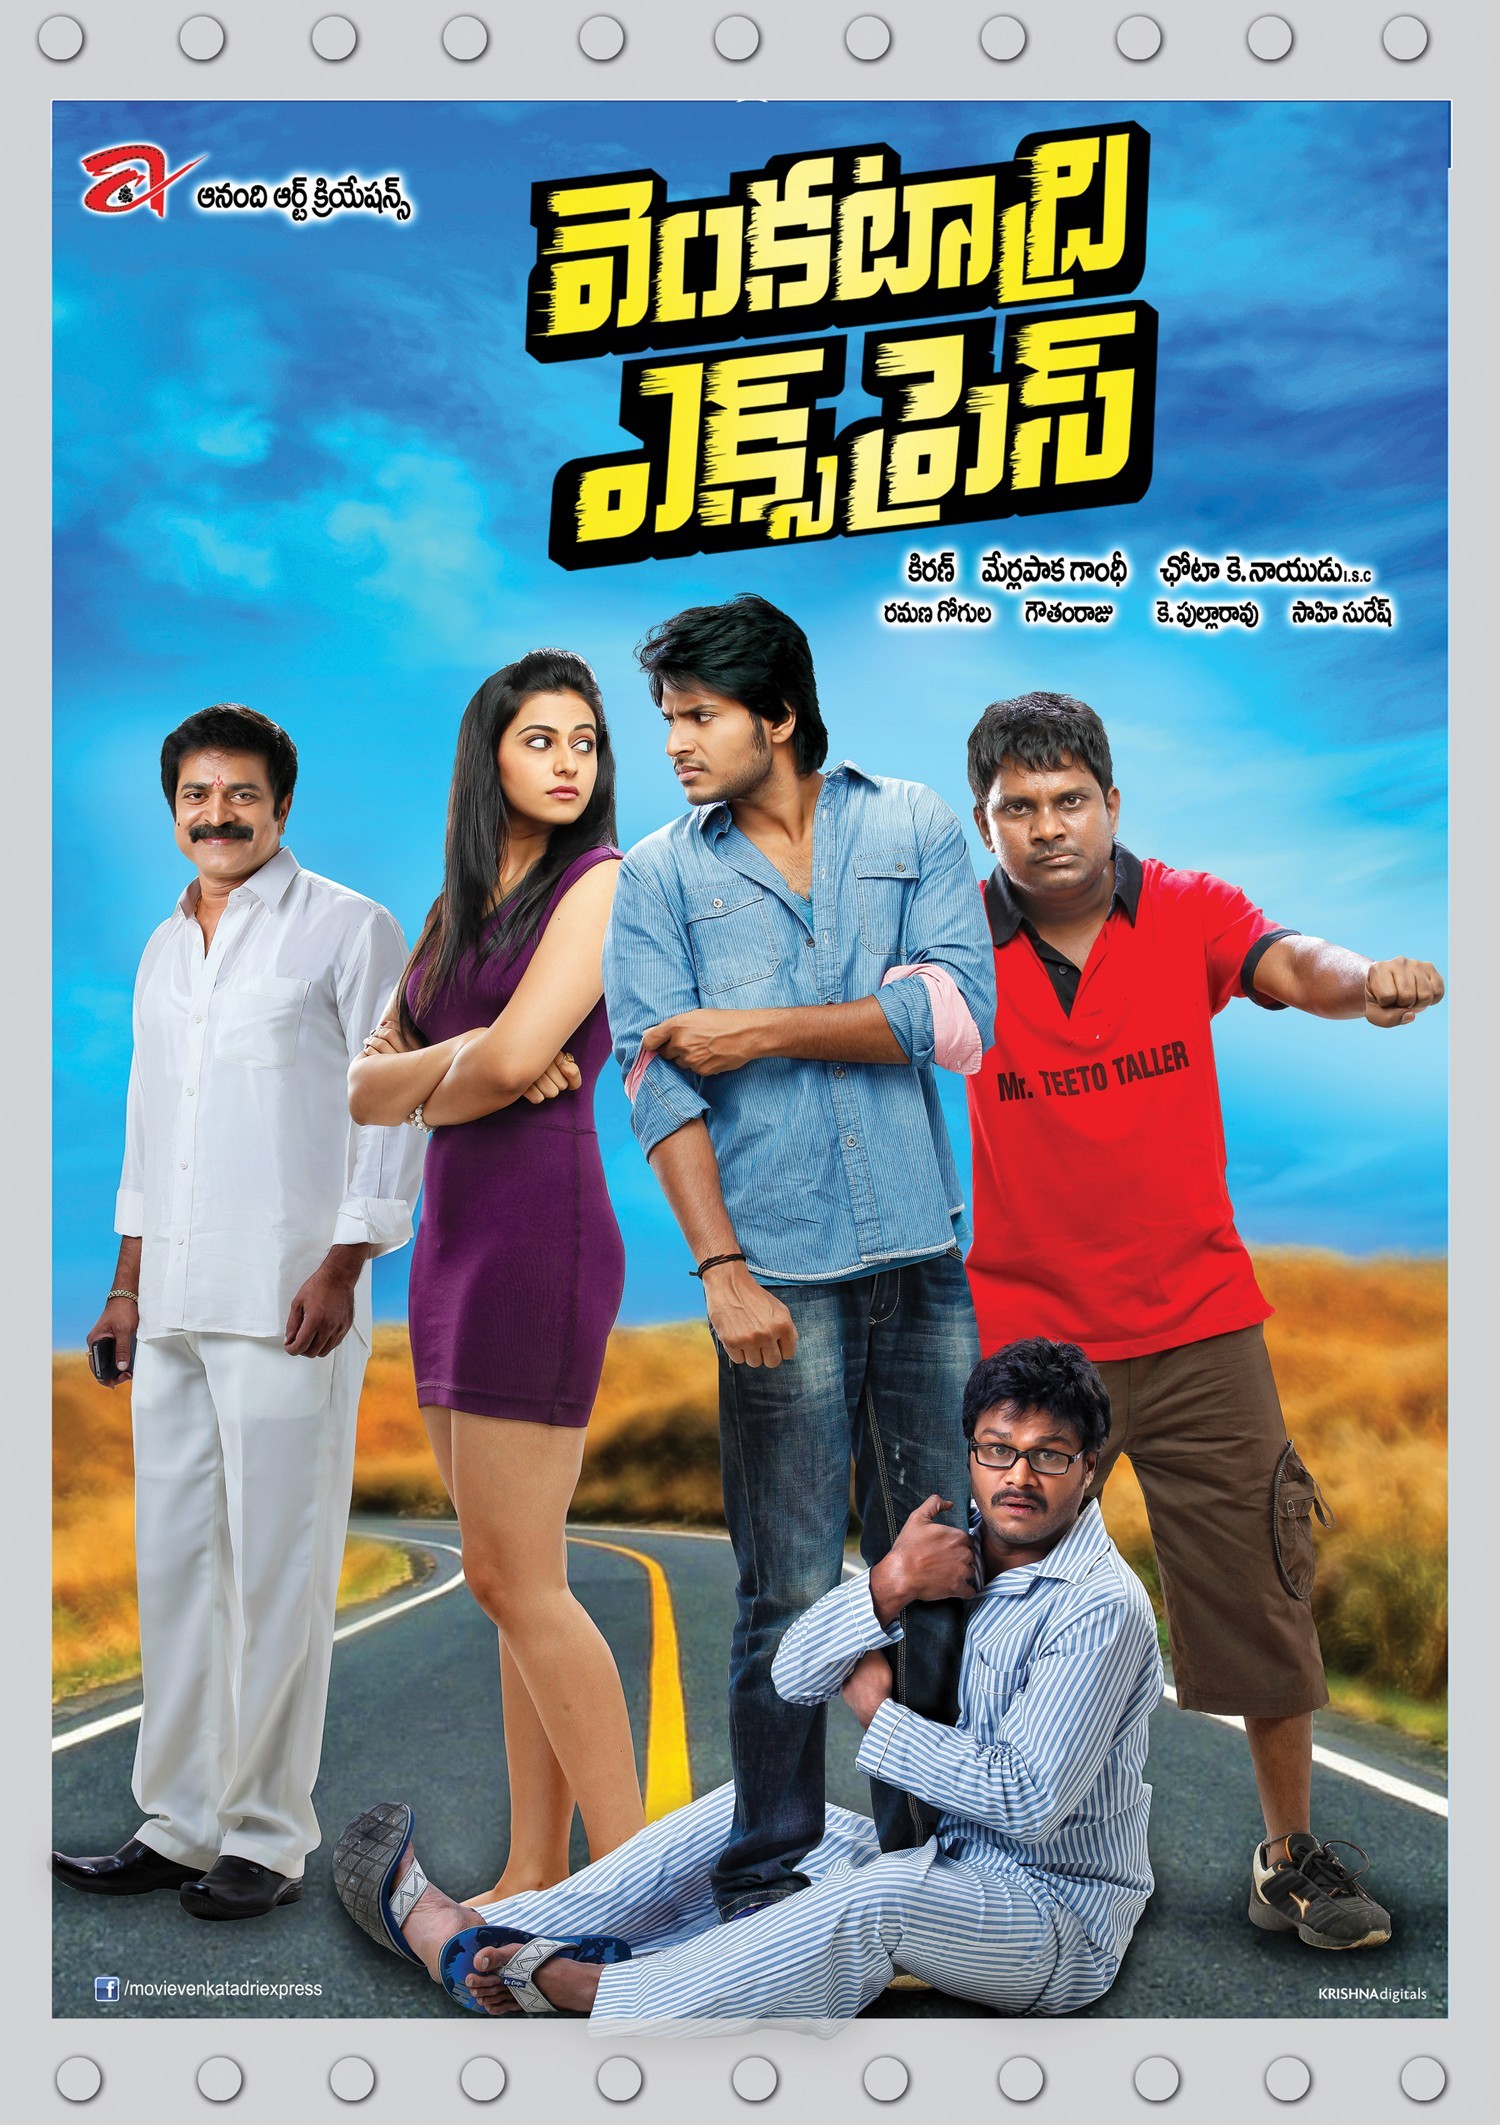 Mega Sized Movie Poster Image for Venkatadri Express (#4 of 17)